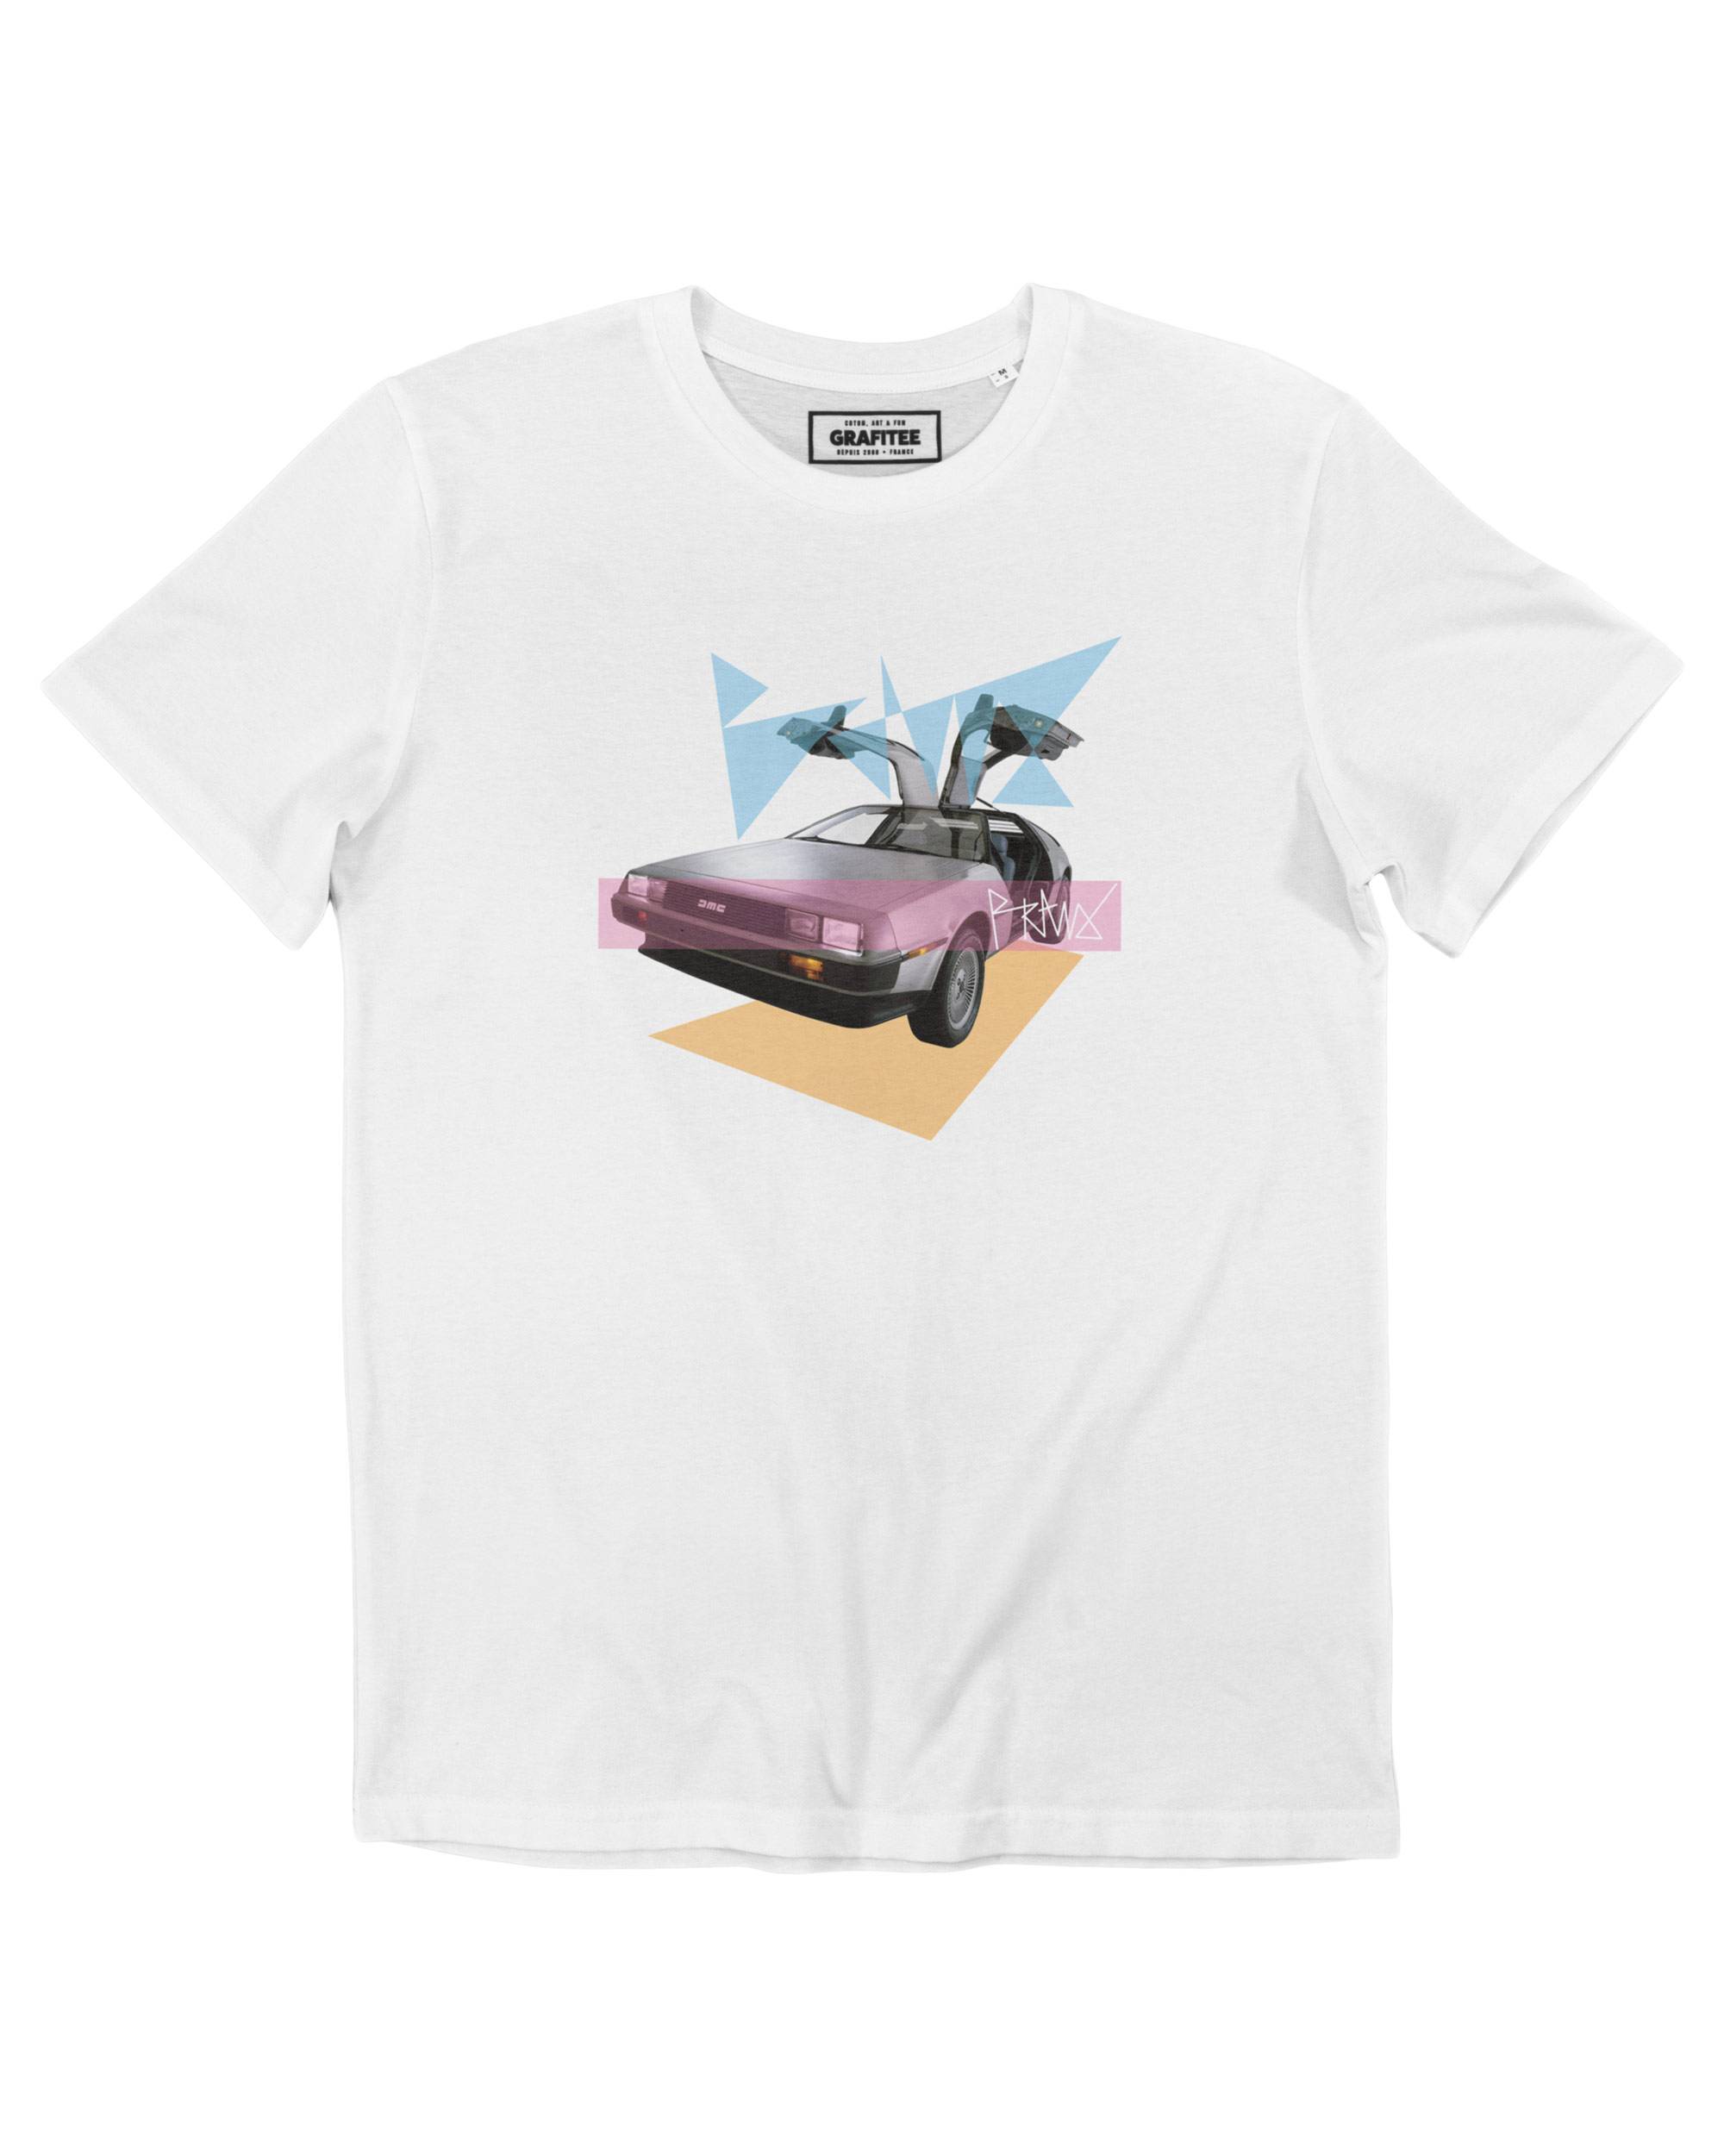 T-shirt DeLorean 90's Grafitee